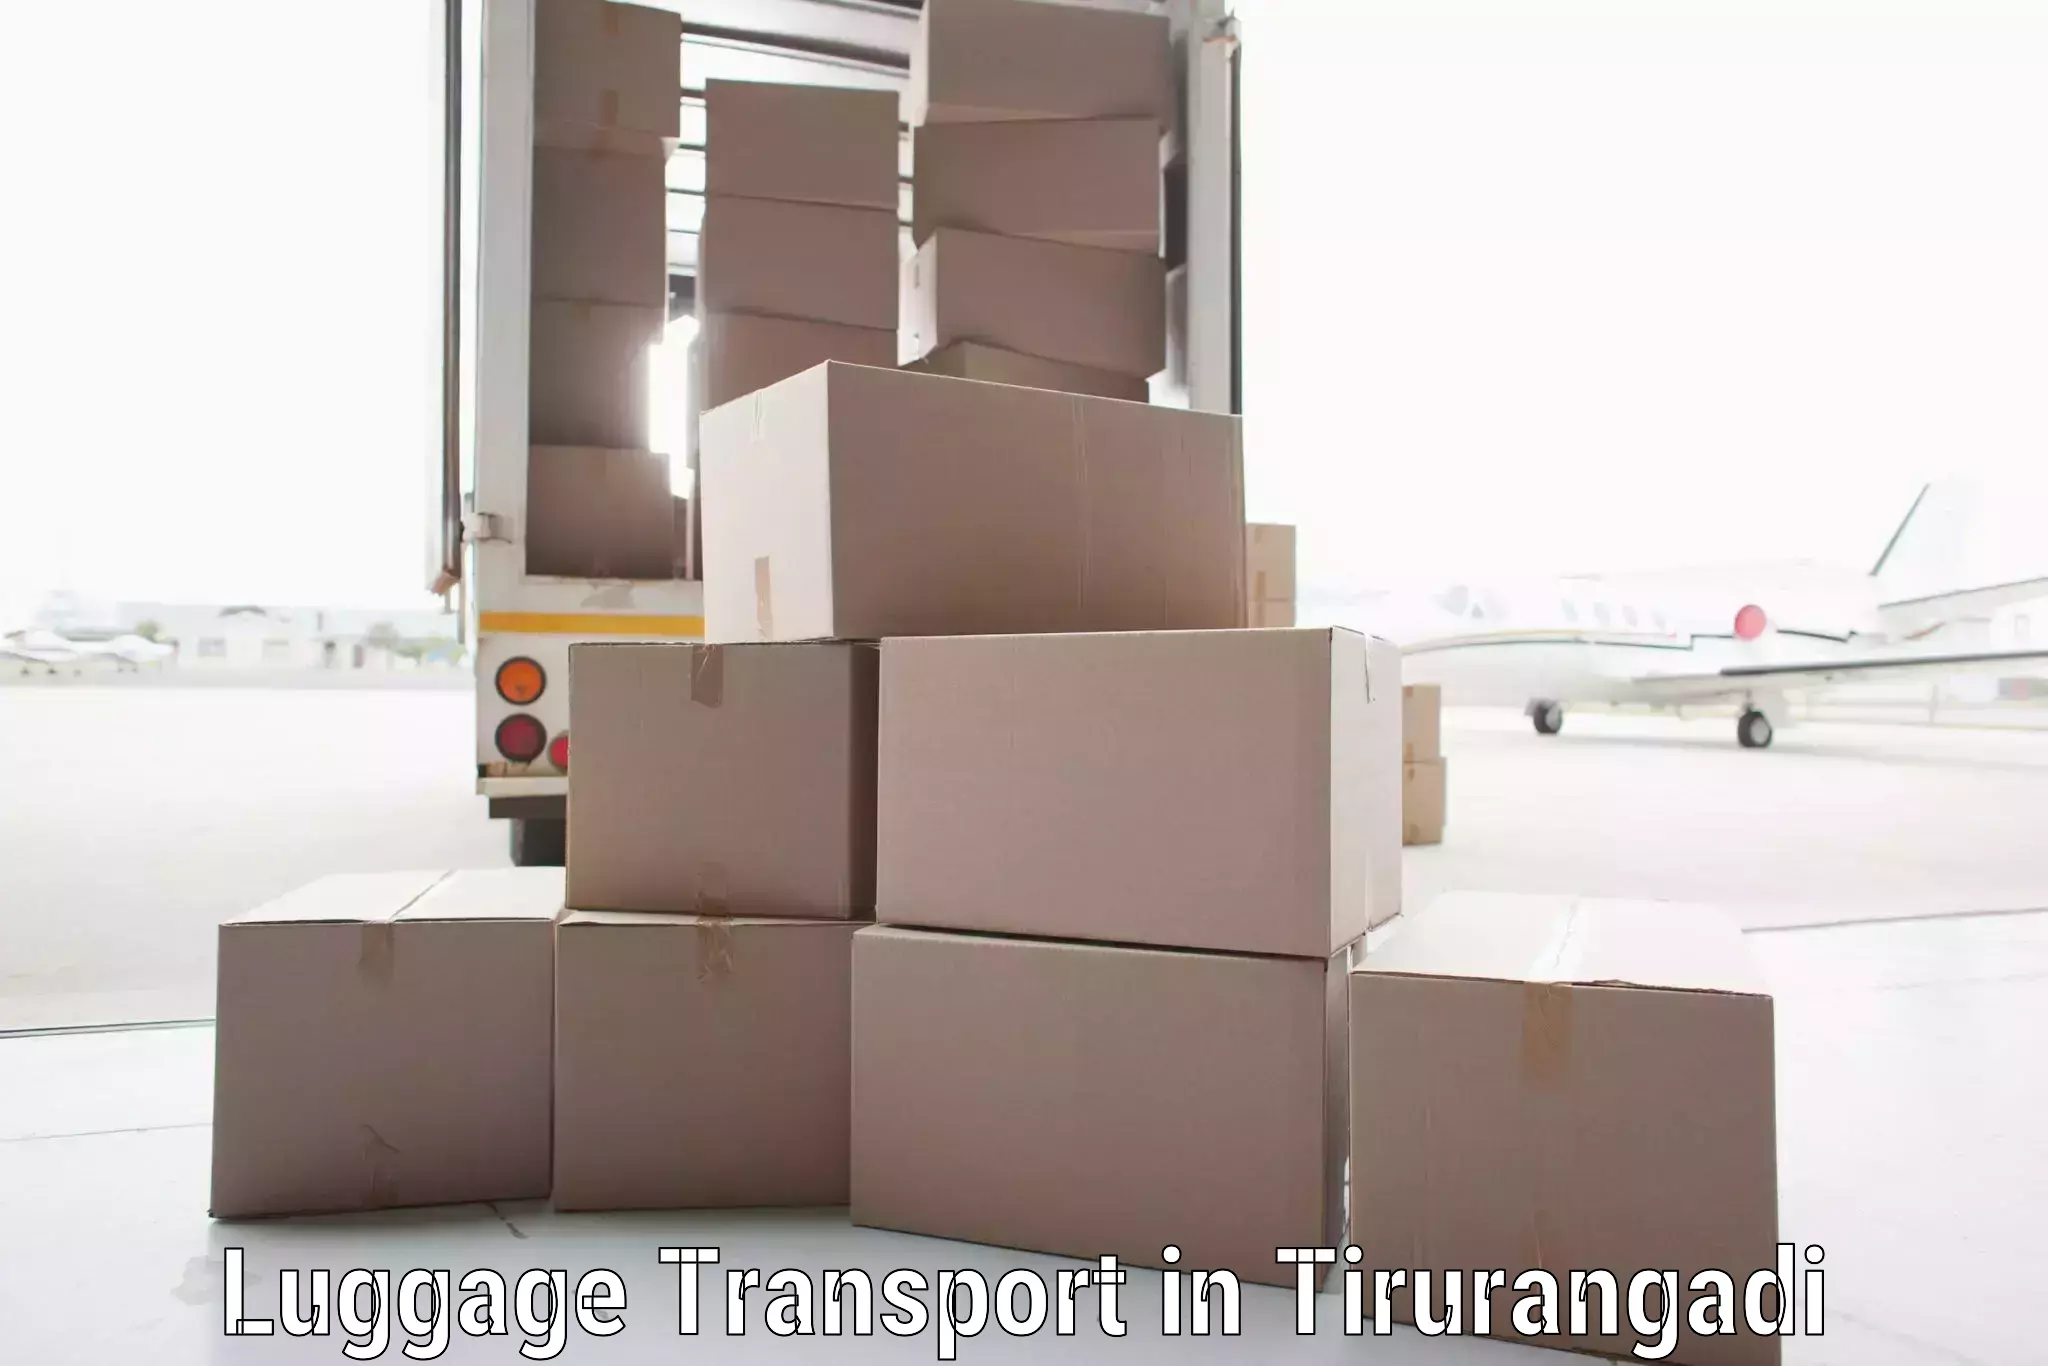 Luggage transport operations in Tirurangadi